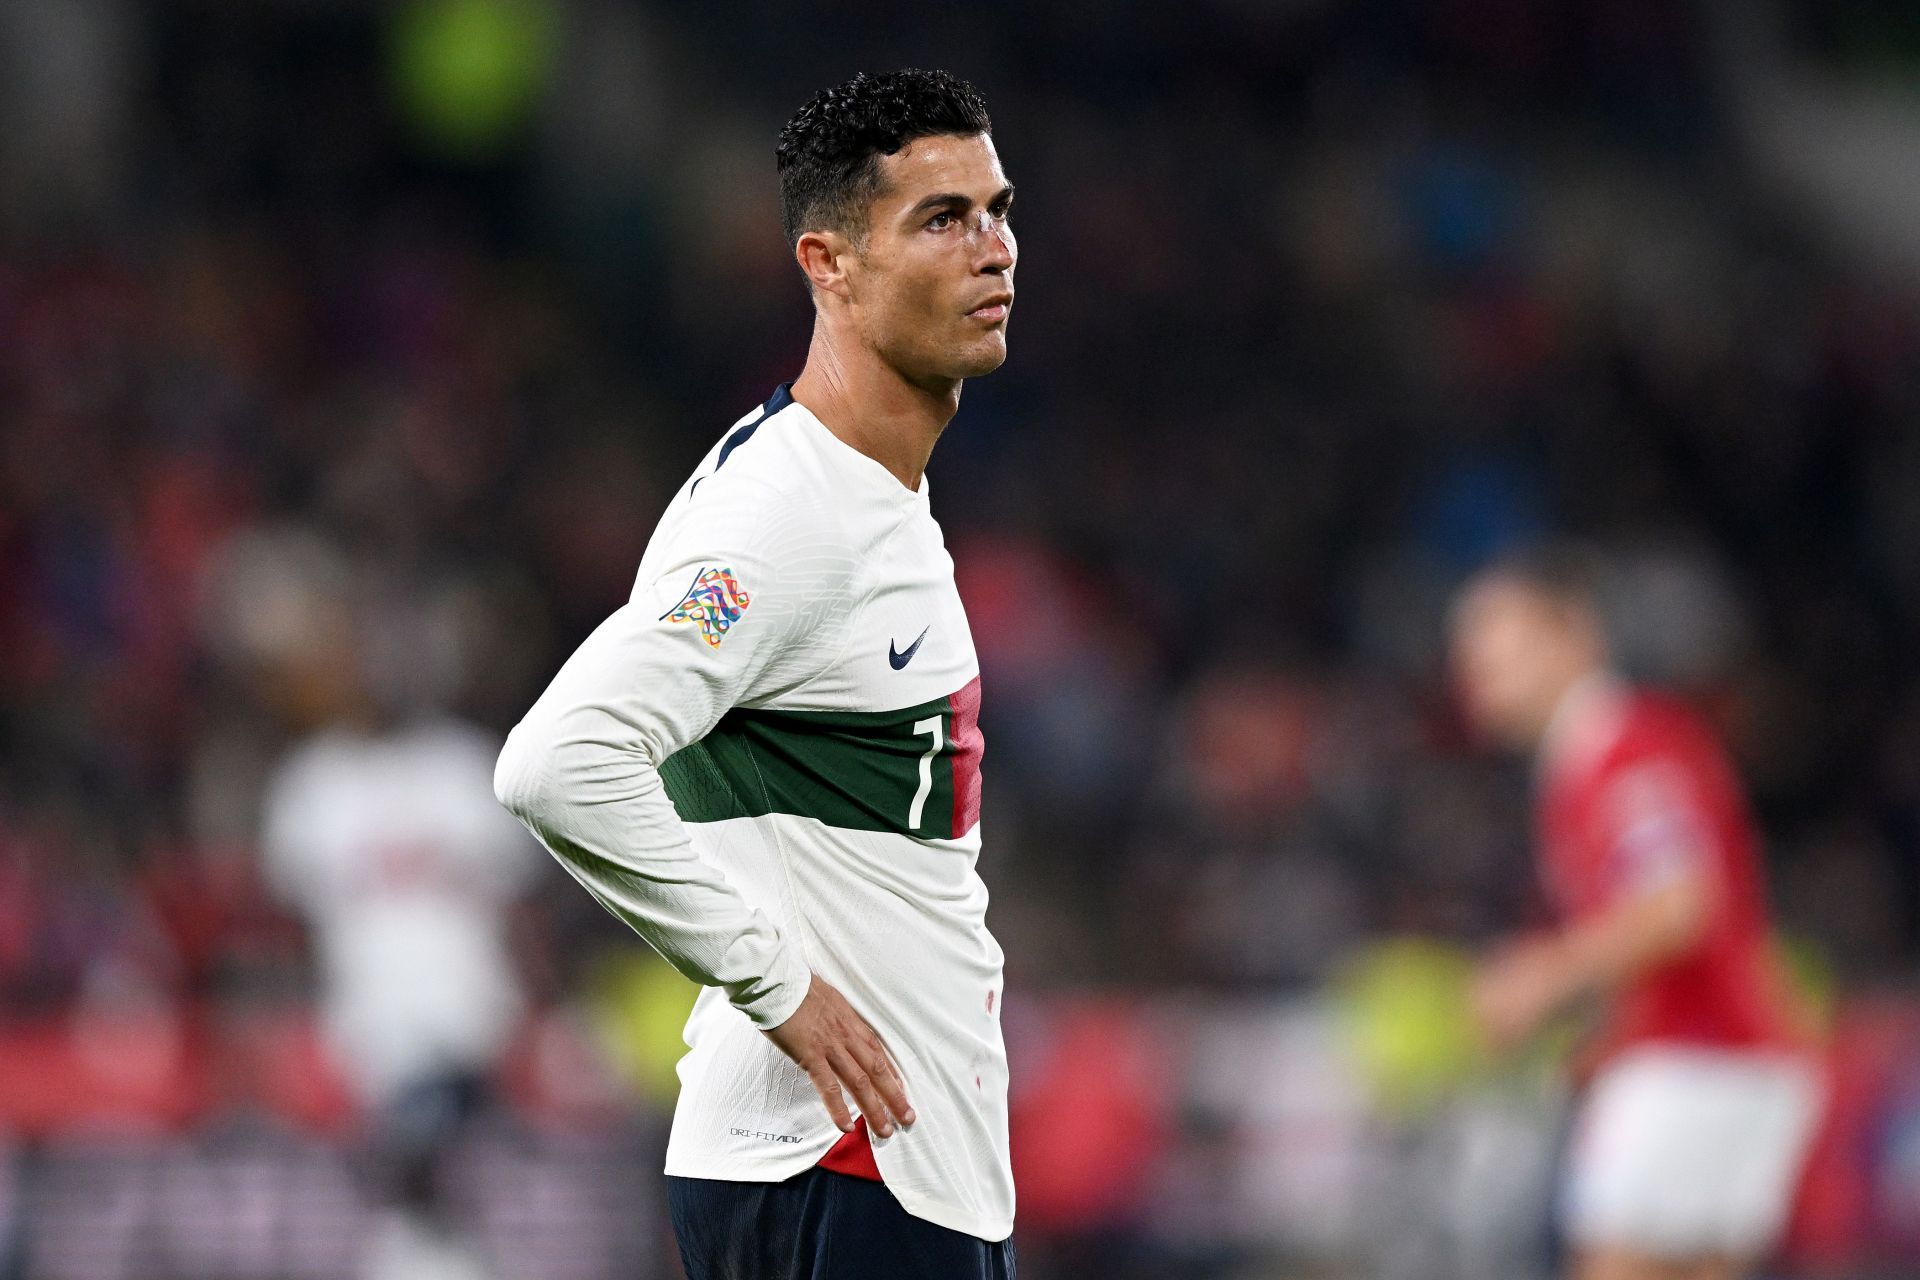 Ronaldo cuts a frustrated figure